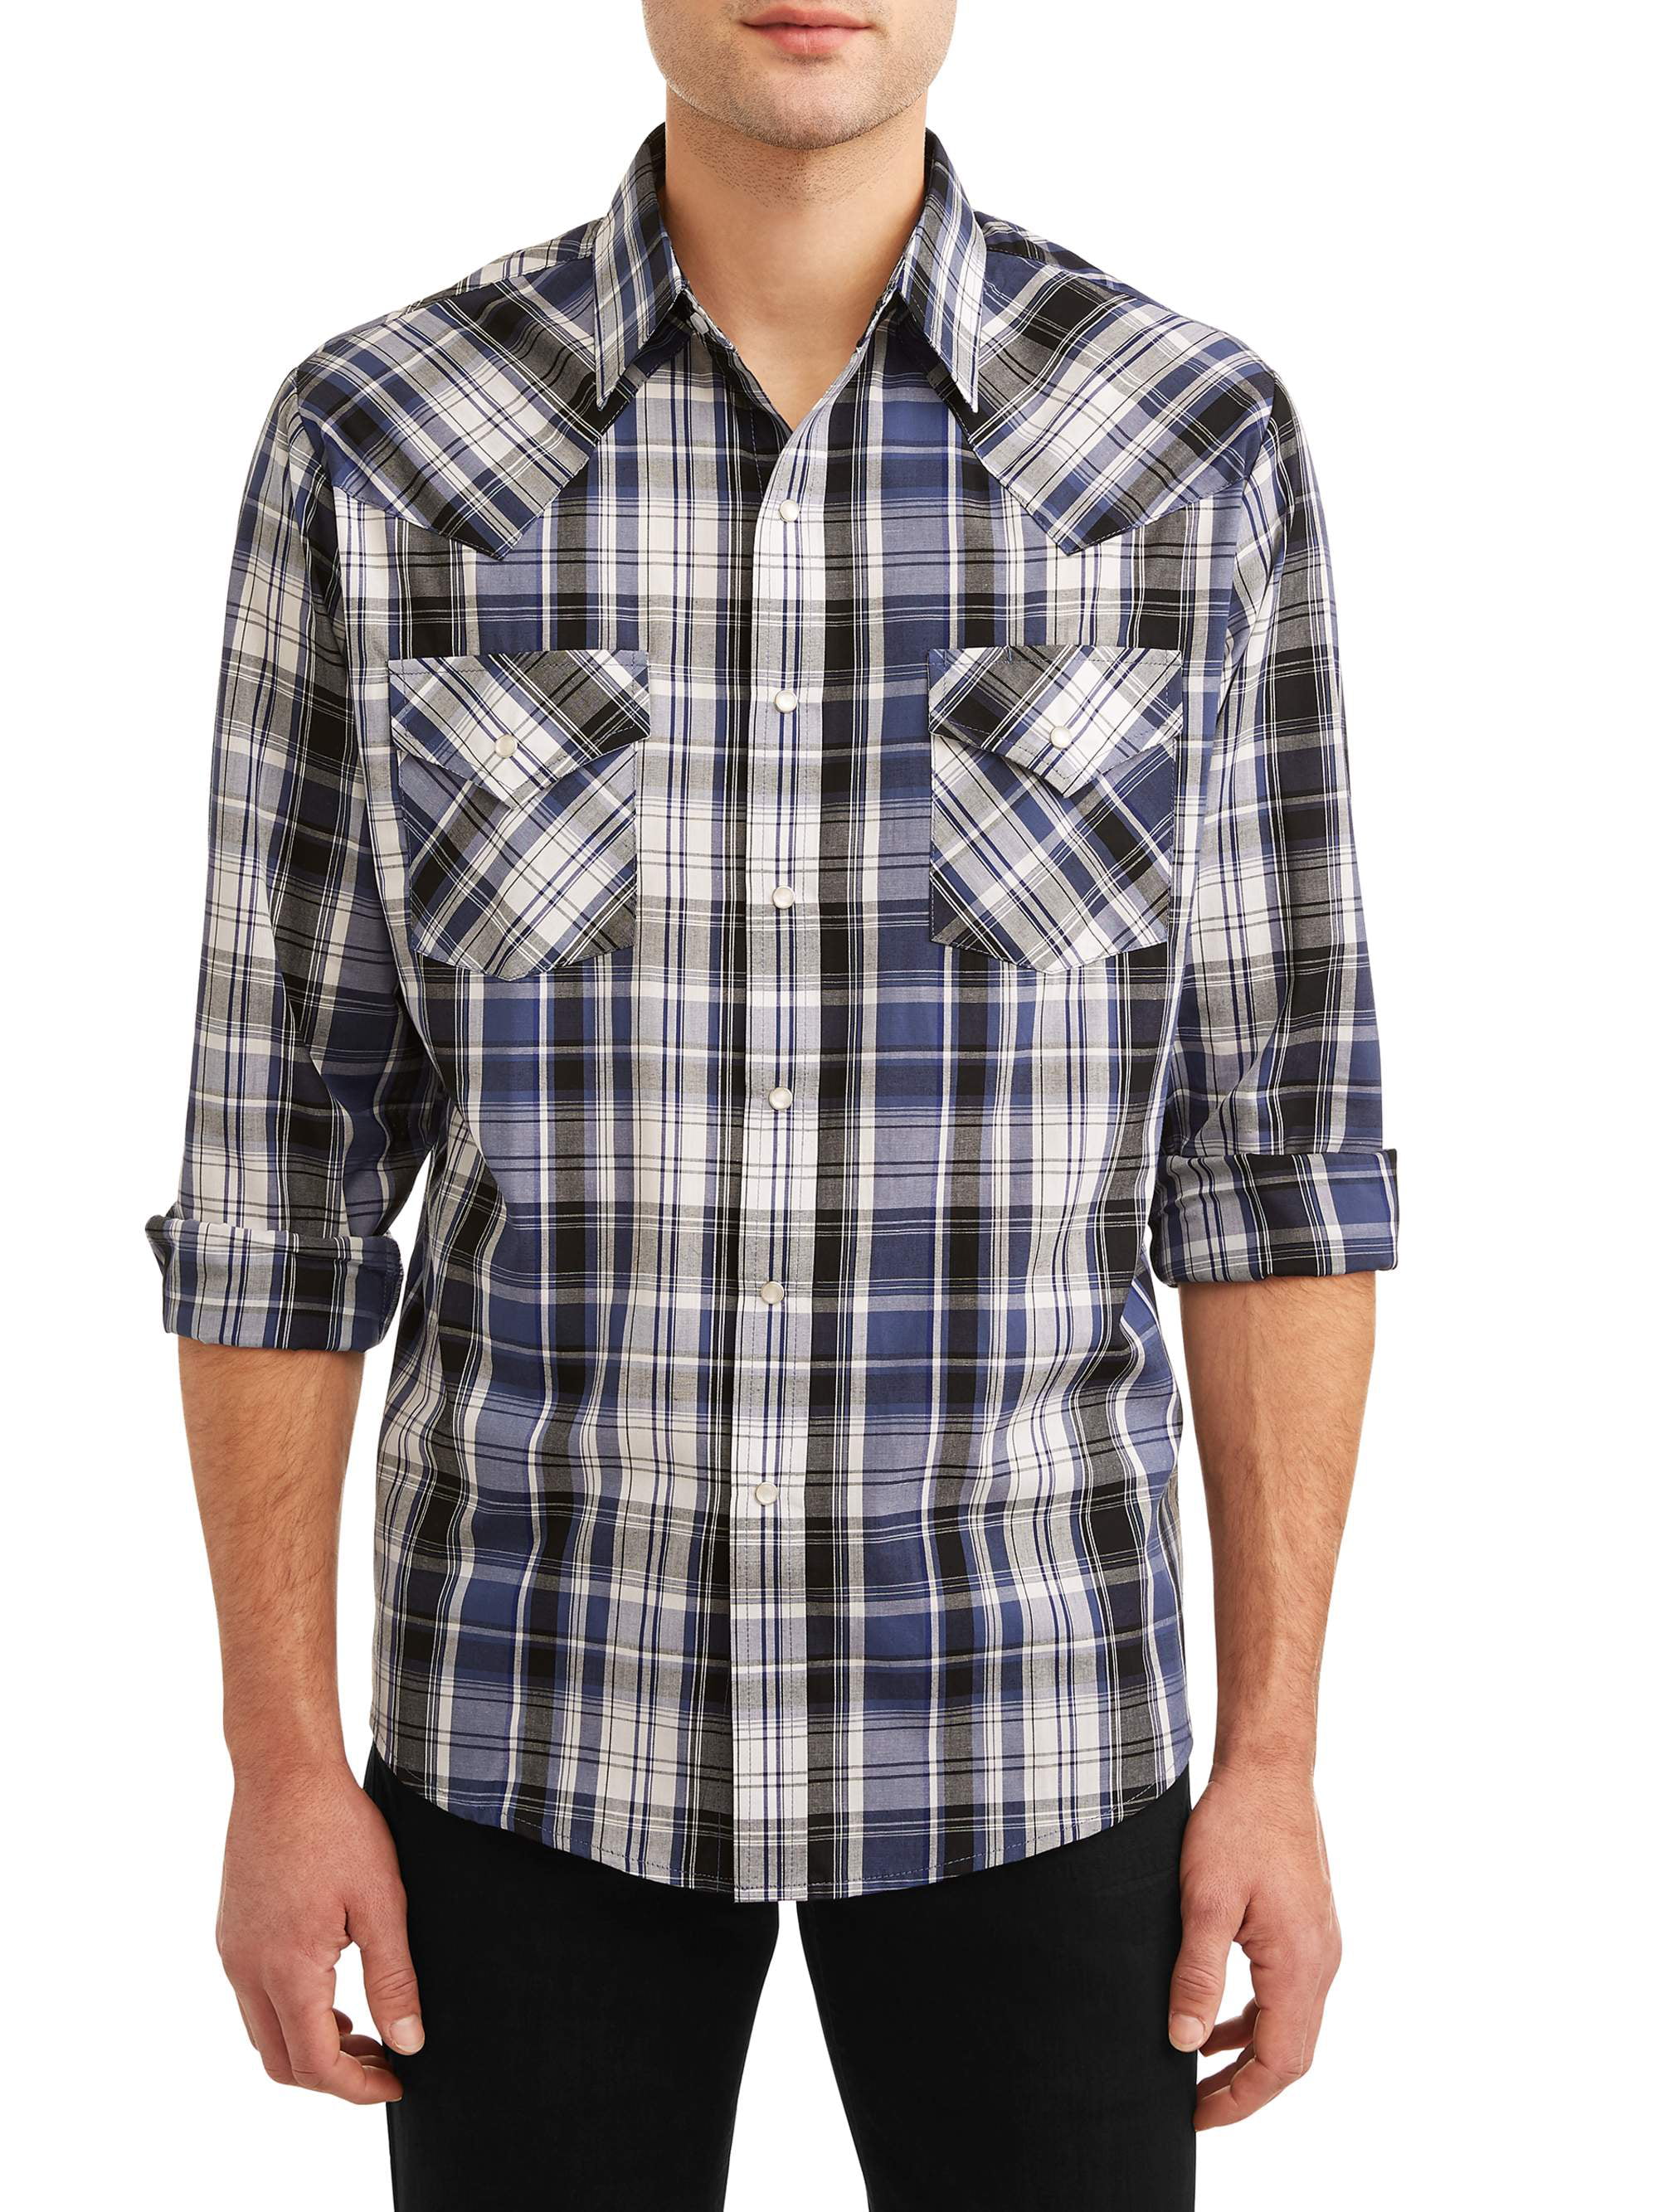 Plains Men's Long Sleeve Plaid Western Shirt, up to Size 4XL - Walmart.com